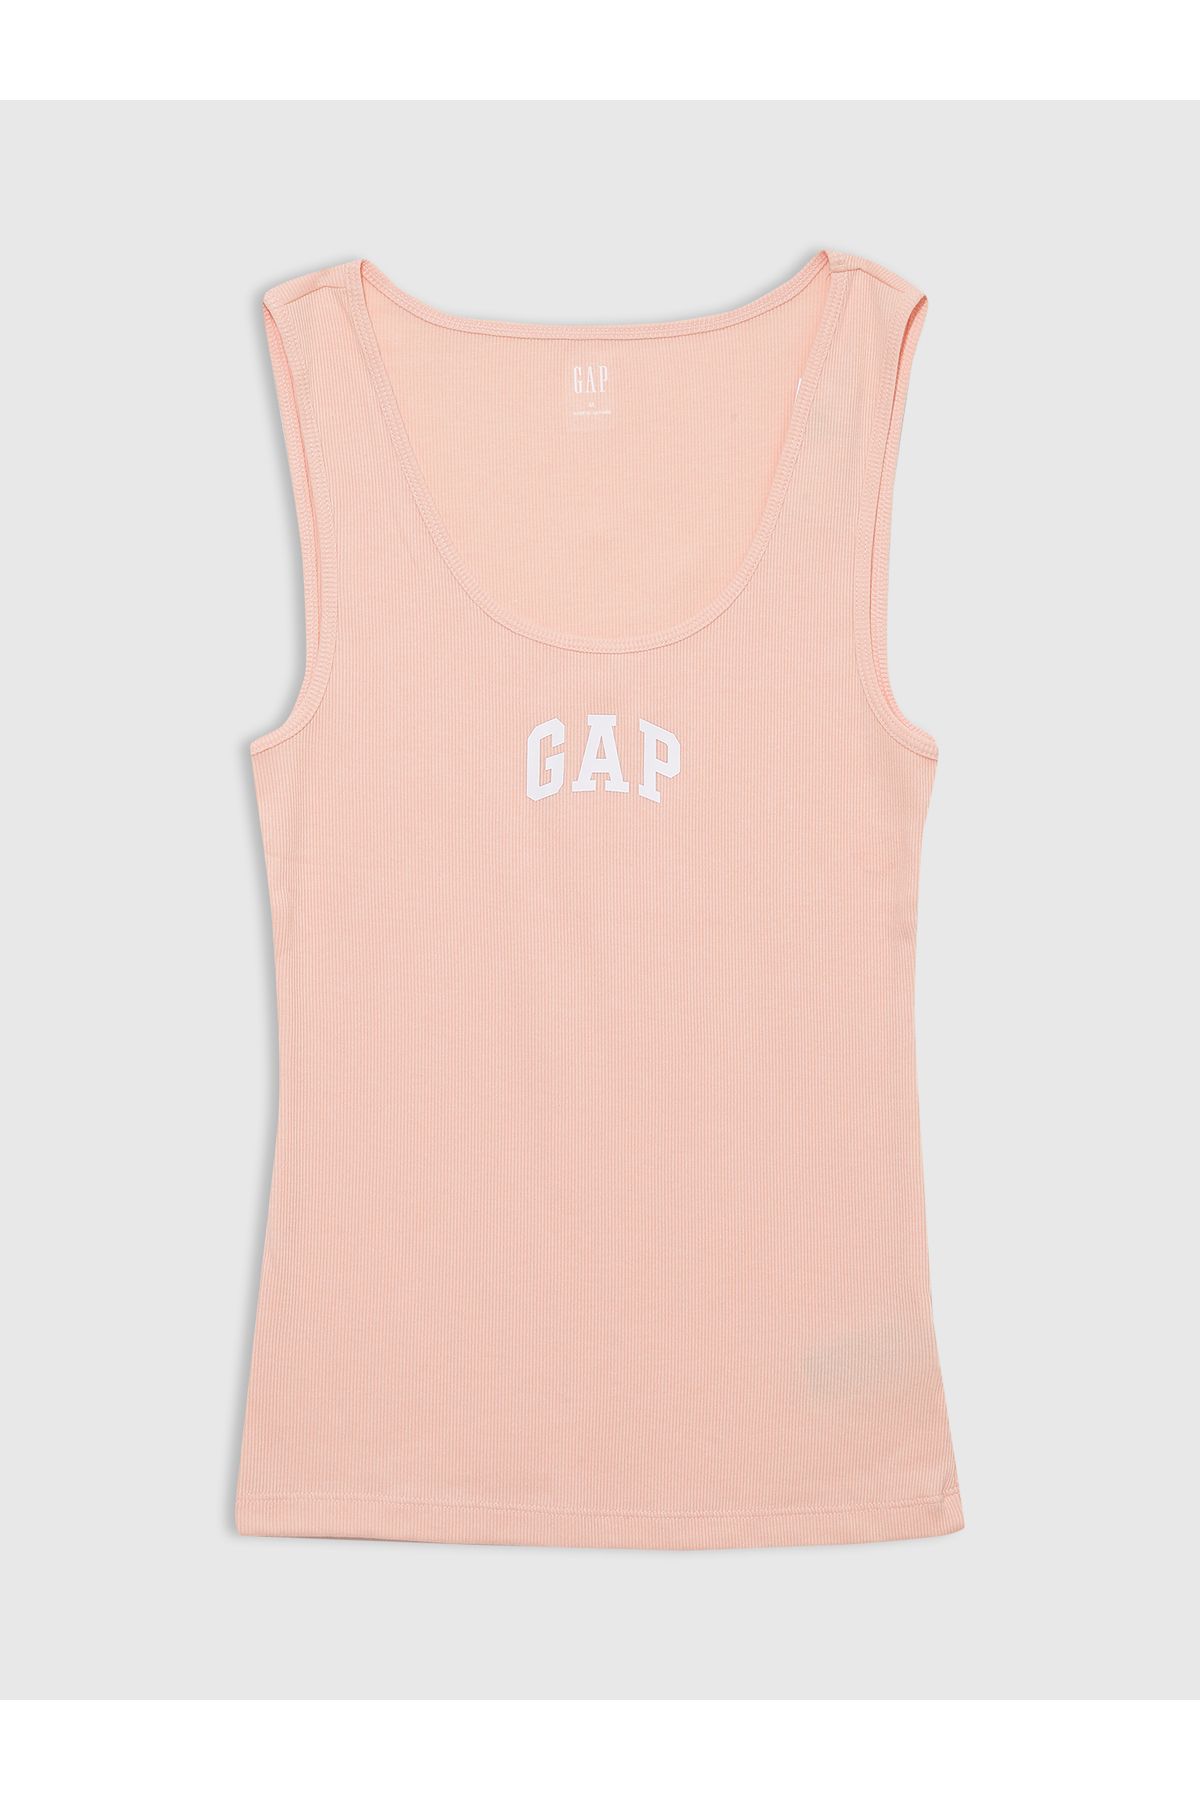 GAP Kadın Turuncu Gap Logo Fitilli Atlet